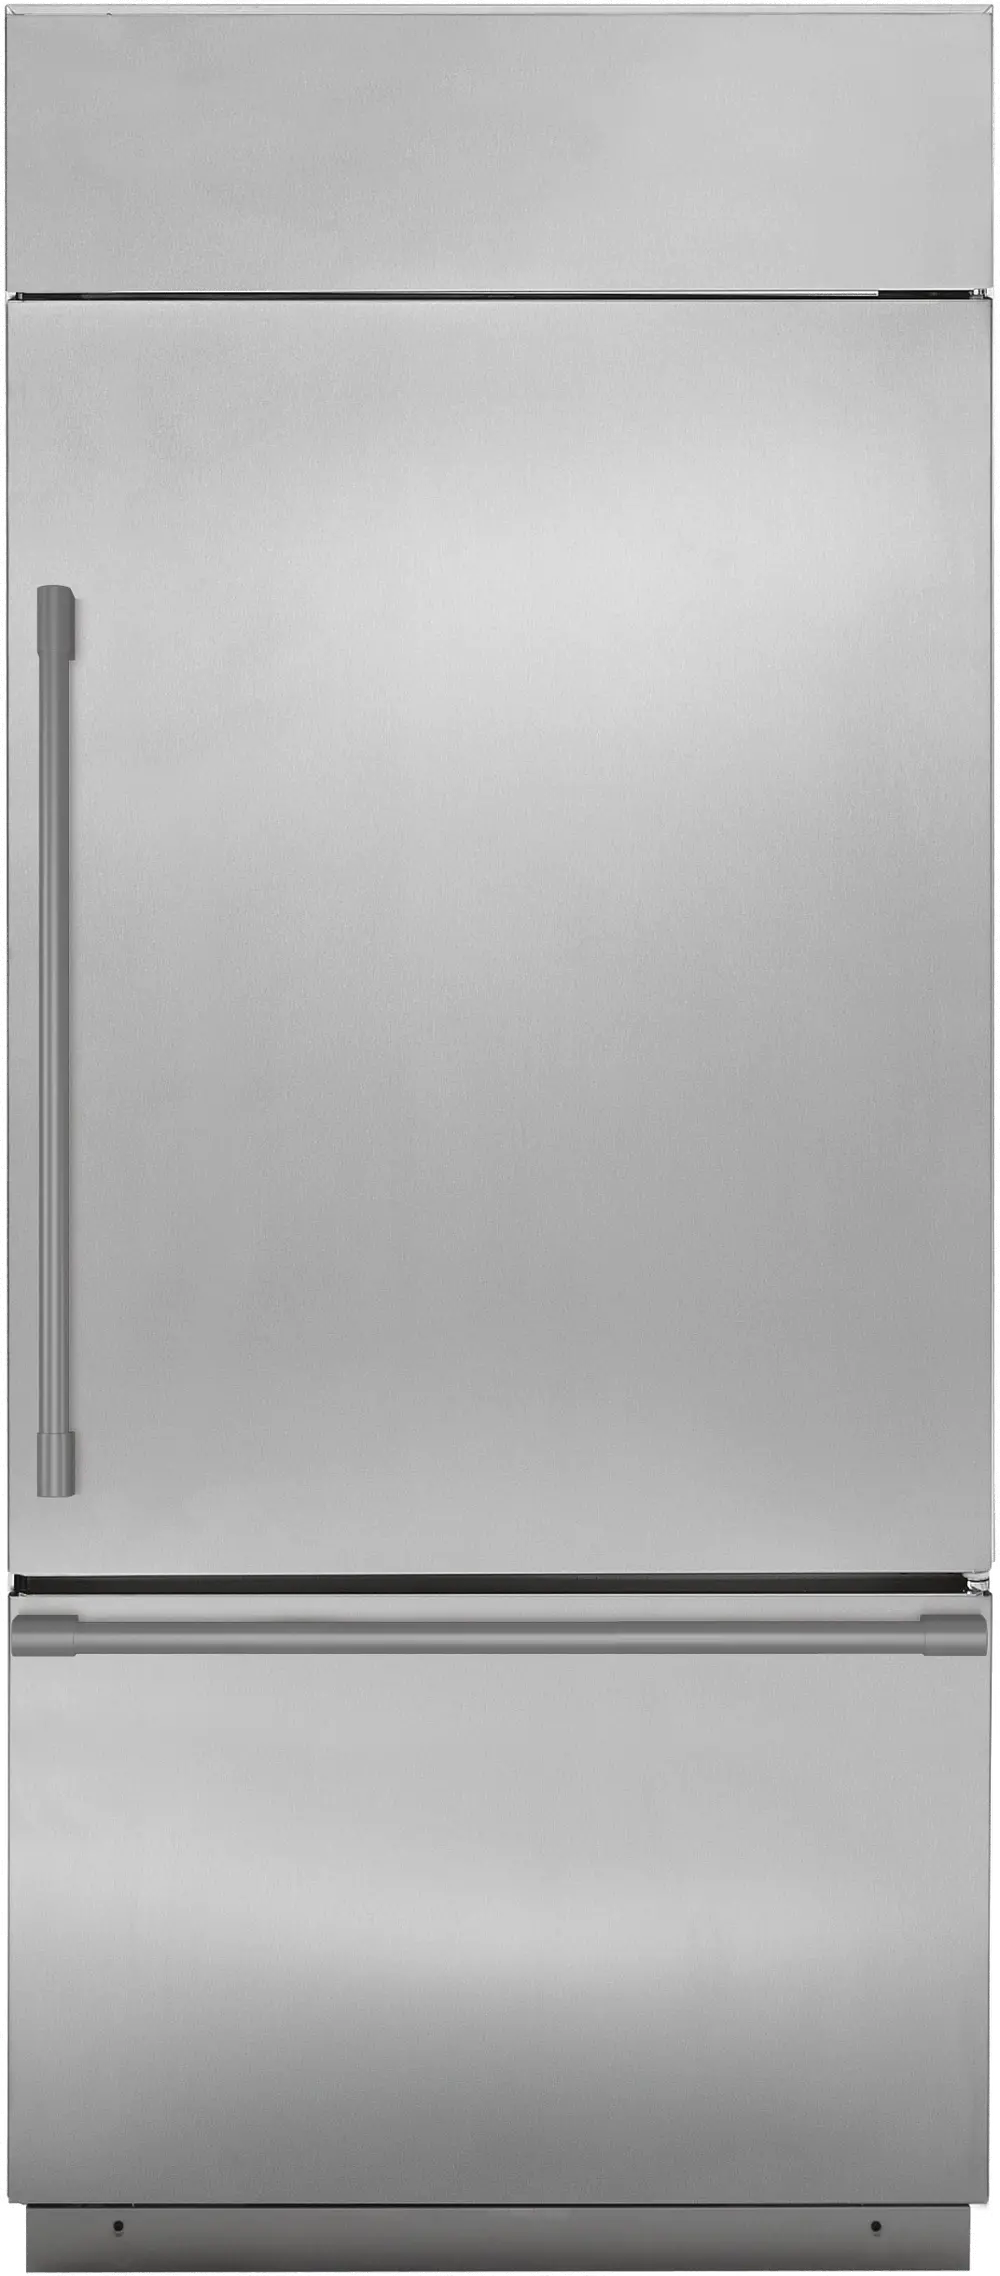 ZICS360NNRH Monogram 36 Inch Bottom Freezer Refrigerator - Stainless Steel, 21.3 cu. ft.-1